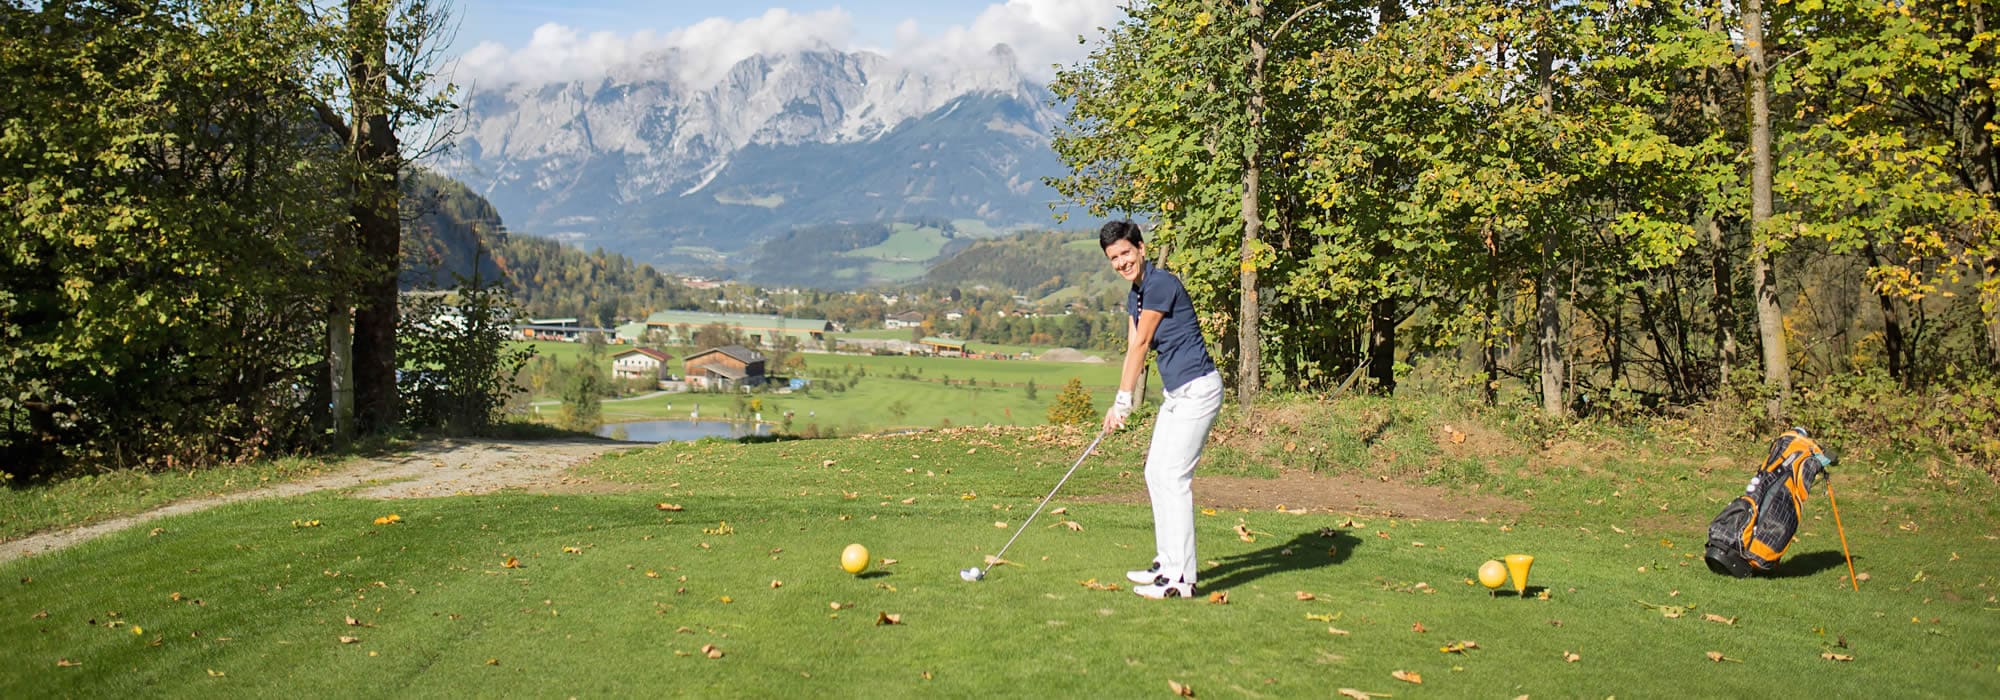 Playing golf in St. Johann - Golf founder Hotel Alpendorf